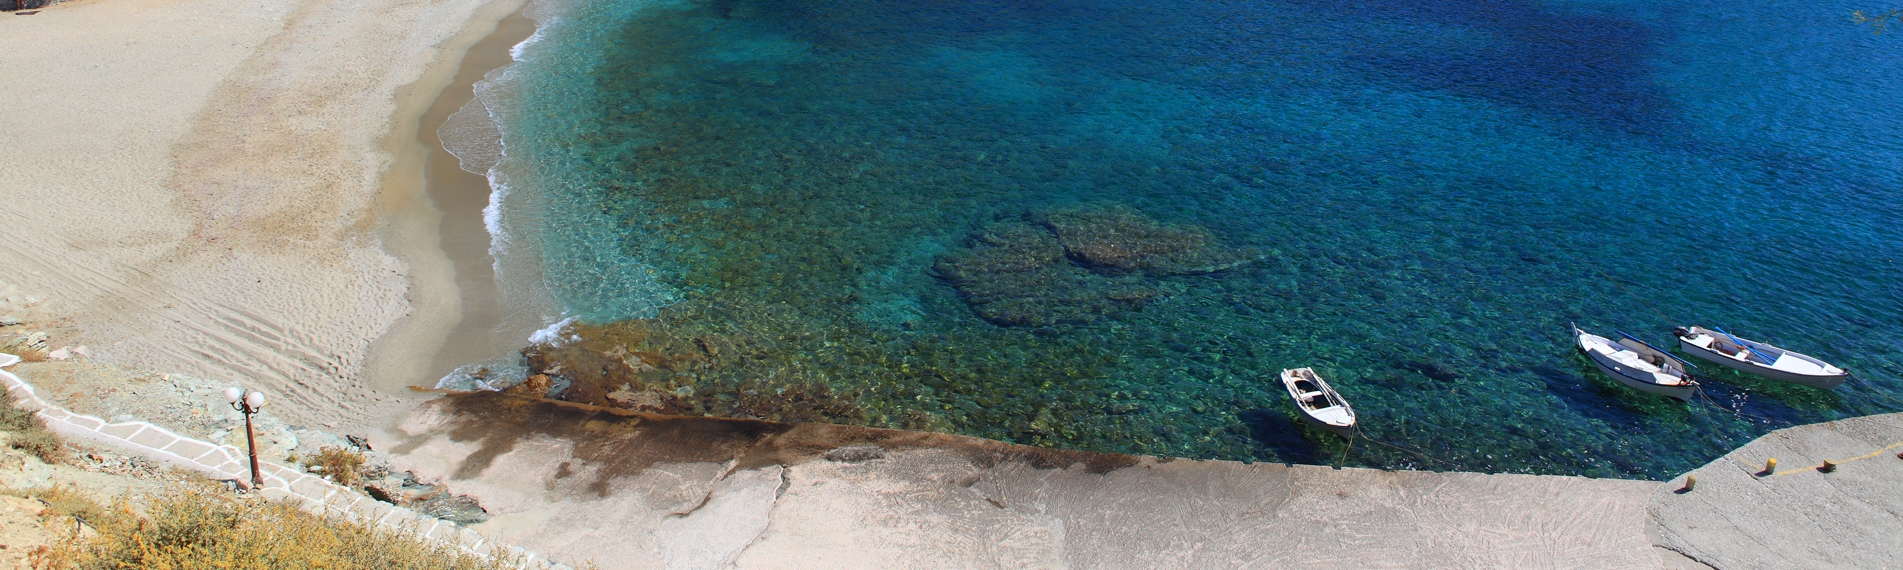 Folegandros in the Cyclades islands, Greece